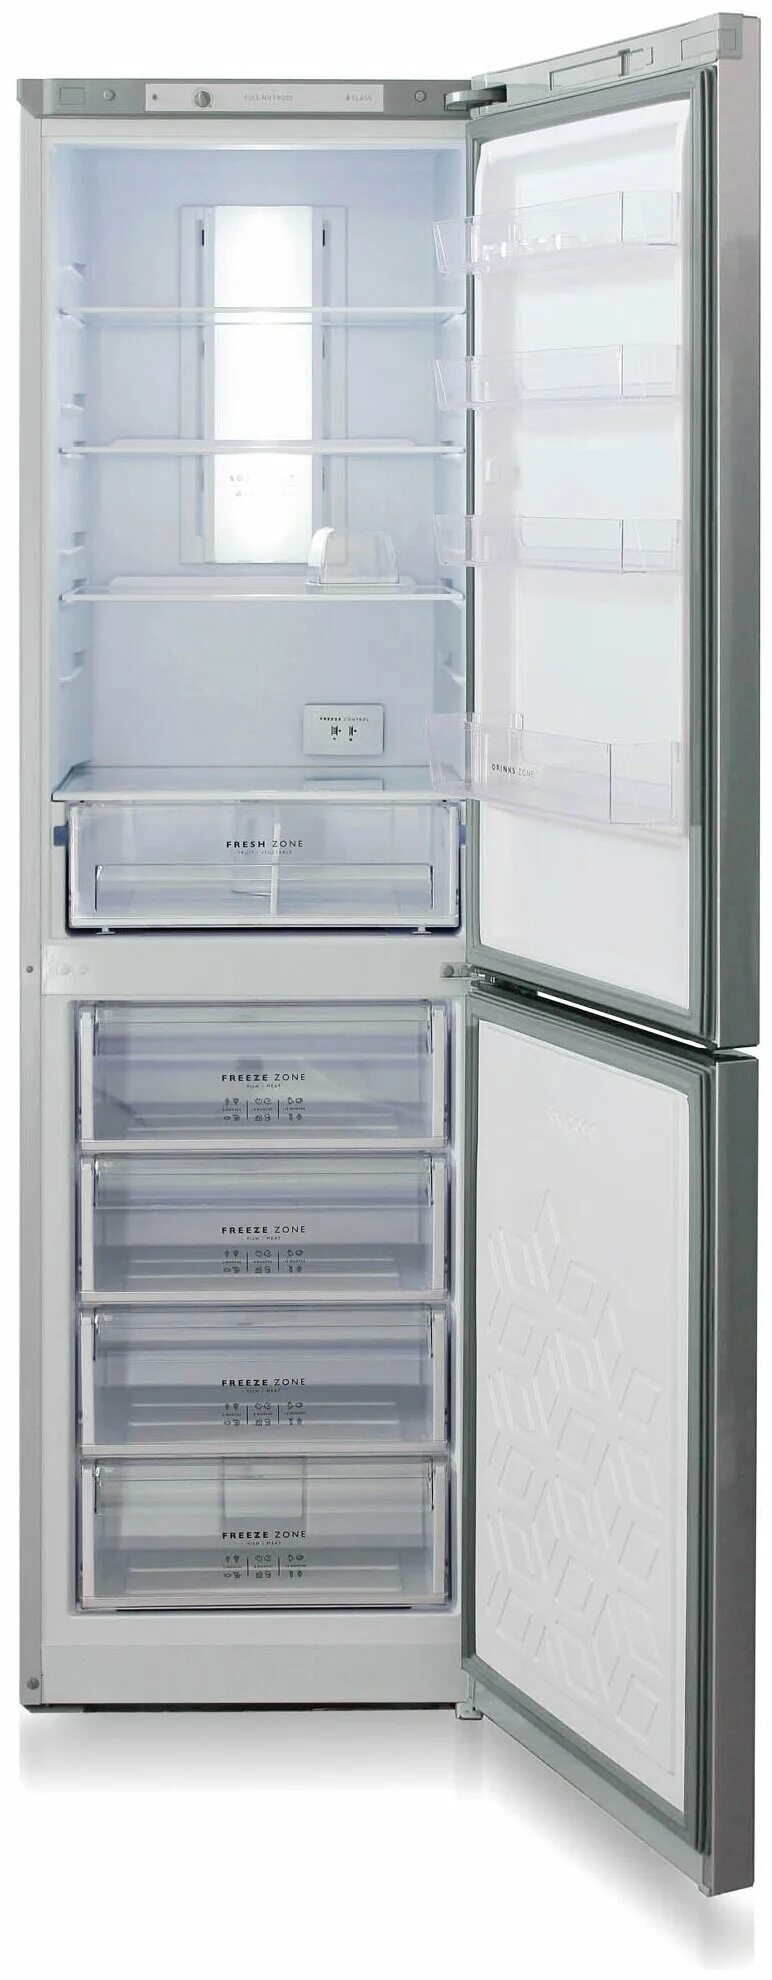 Холодильник бирюса 880nf. Бирюса 880nf. Бирюса 880nf Техмир. Холодильник Бирюса i880nf. Холодильник Бирюса 880.